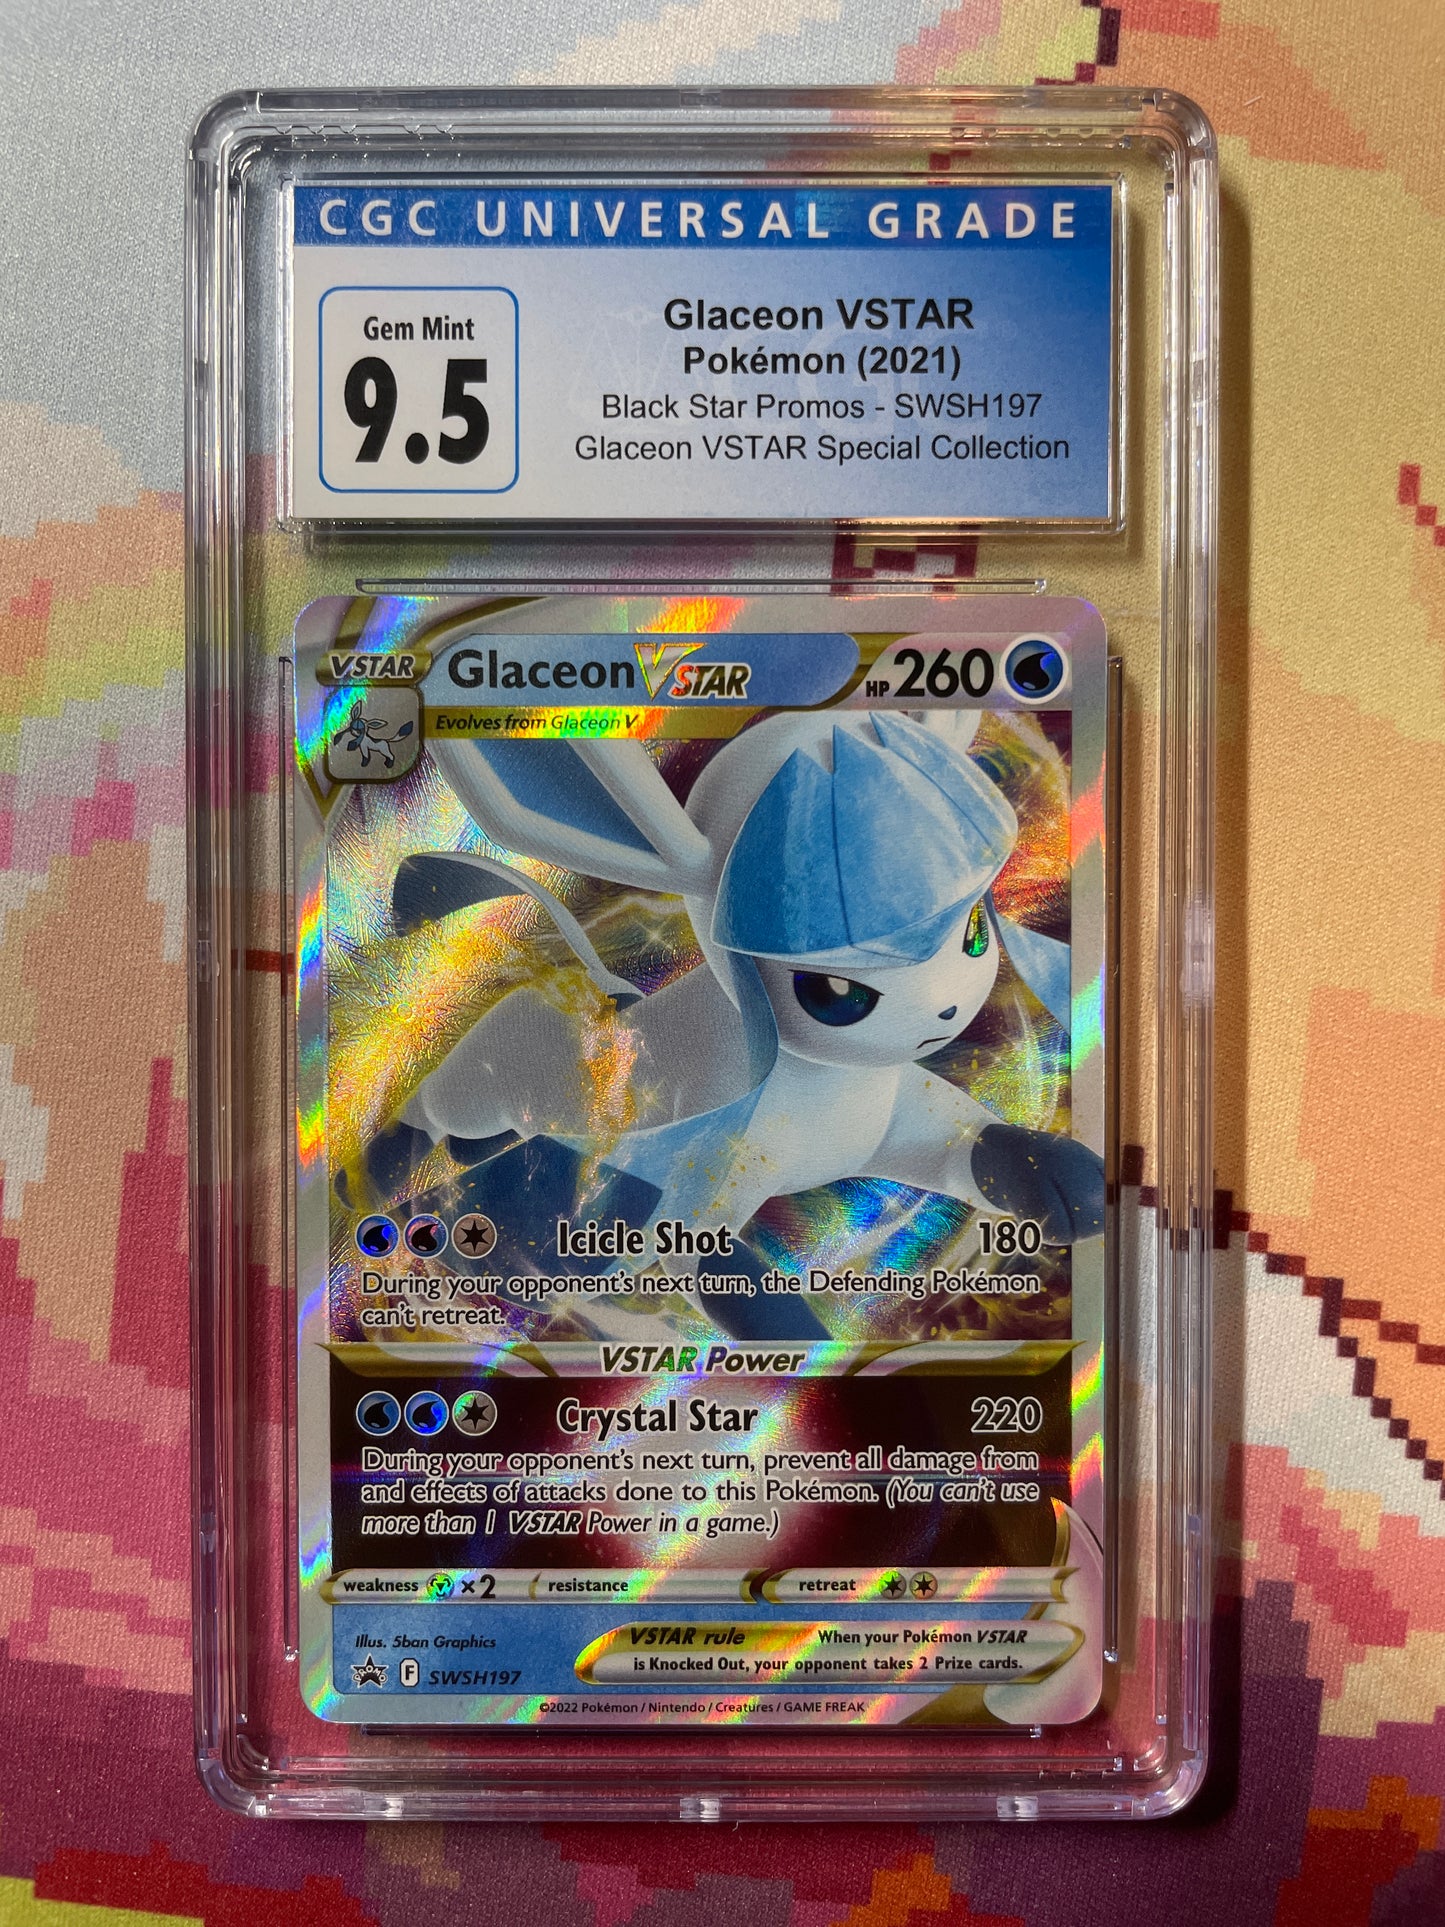 2021 Pokémon Black Star Promos Glaceon VSTAR SWSH197 CGC 9.5 Gem Mint